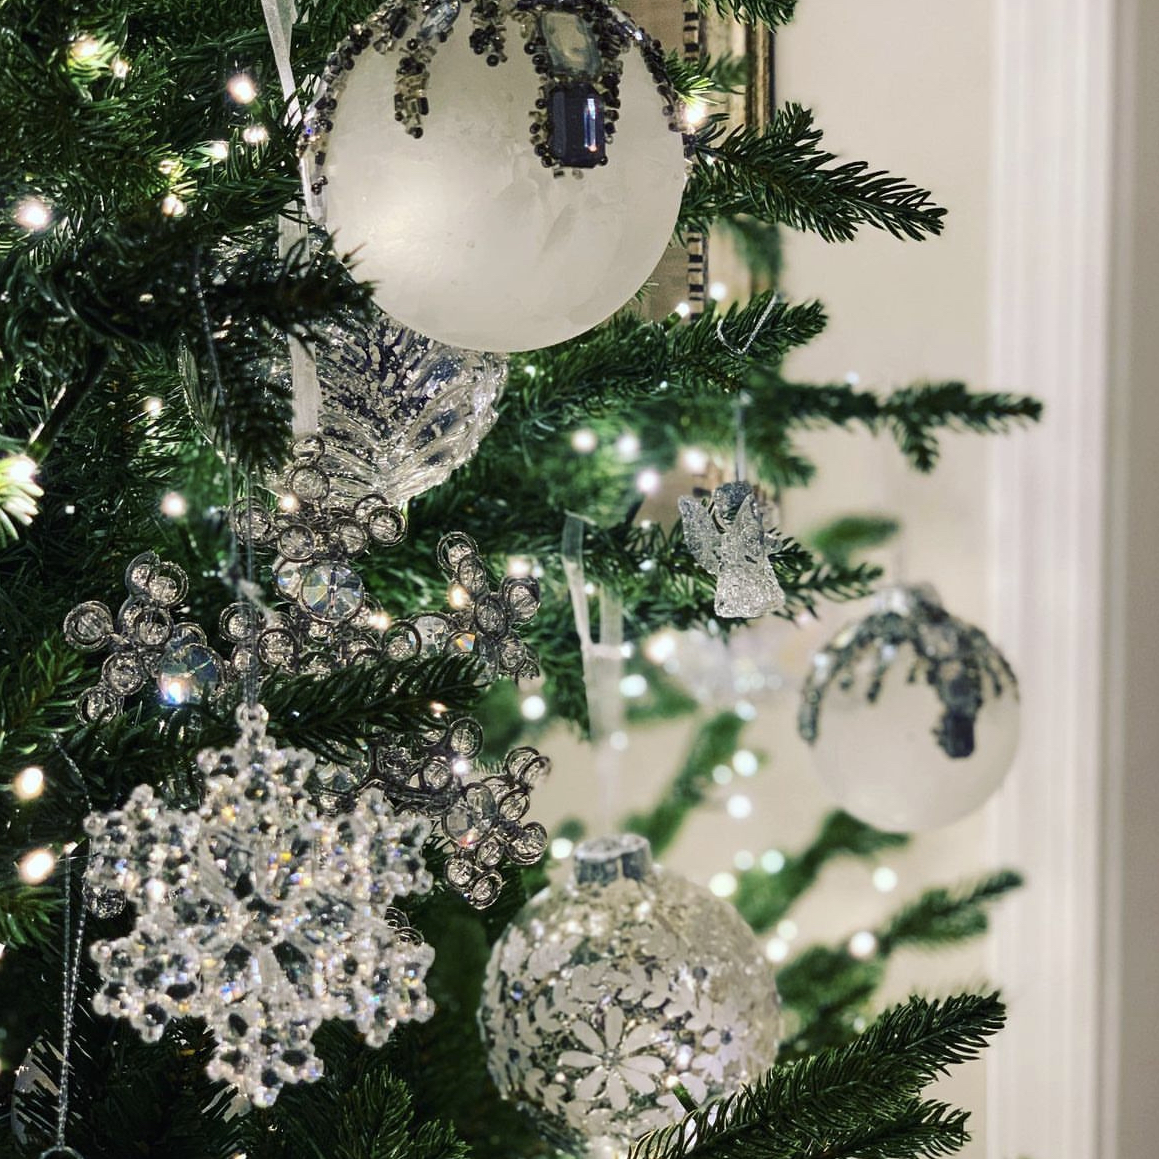 Christmas tree - holiday decor